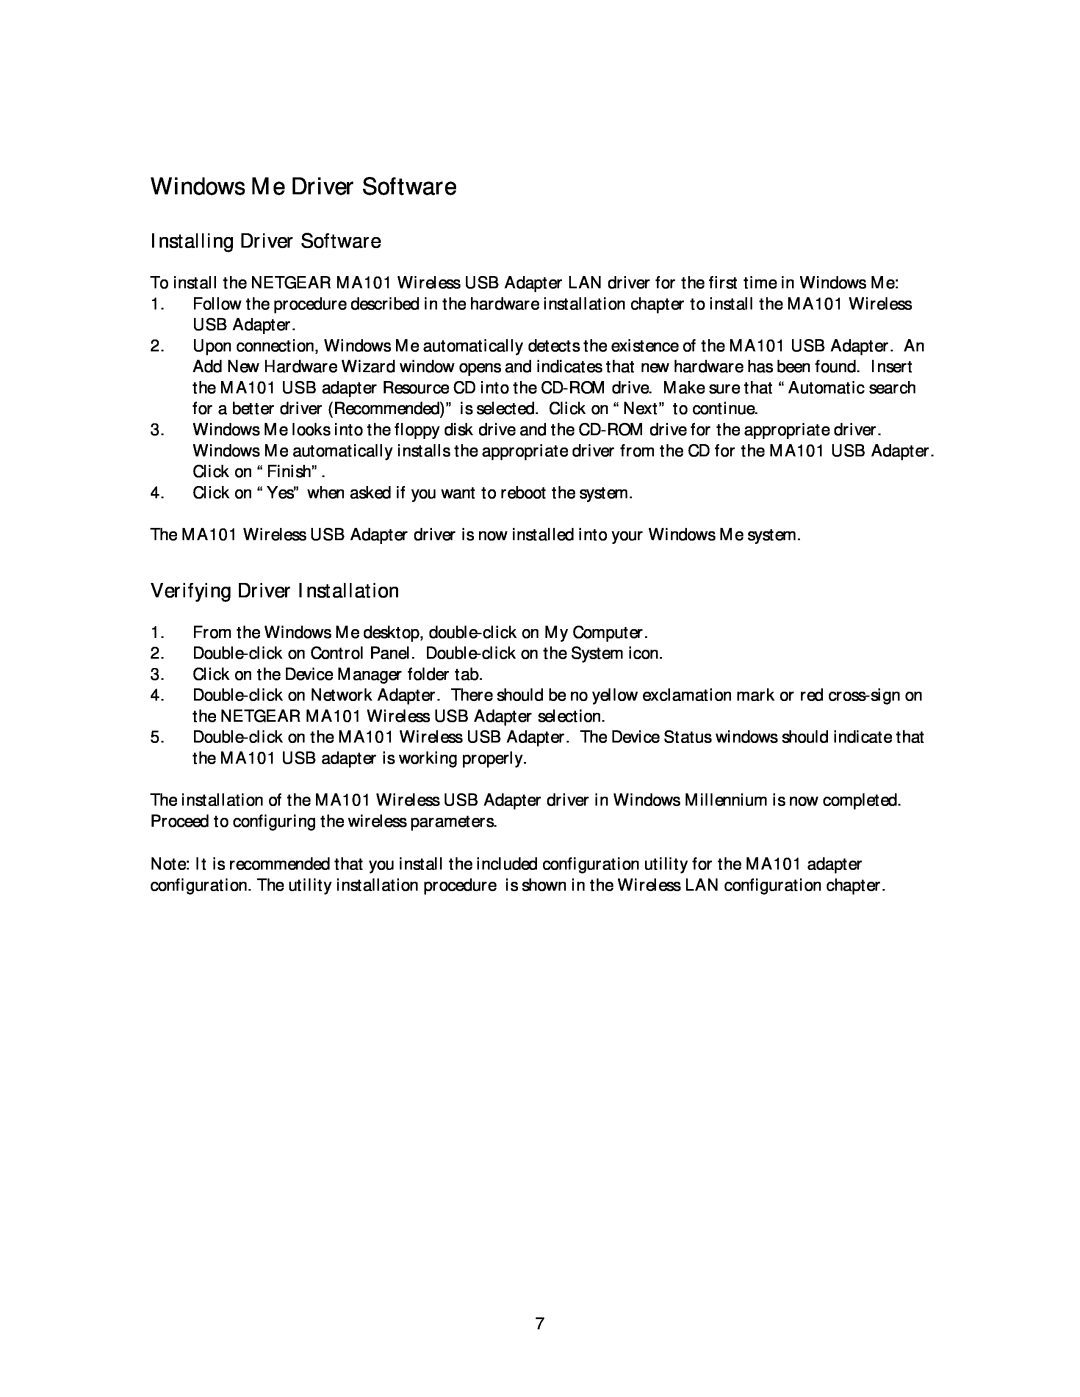 NETGEAR MA 101 manual Windows Me Driver Software, Installing Driver Software, Verifying Driver Installation 